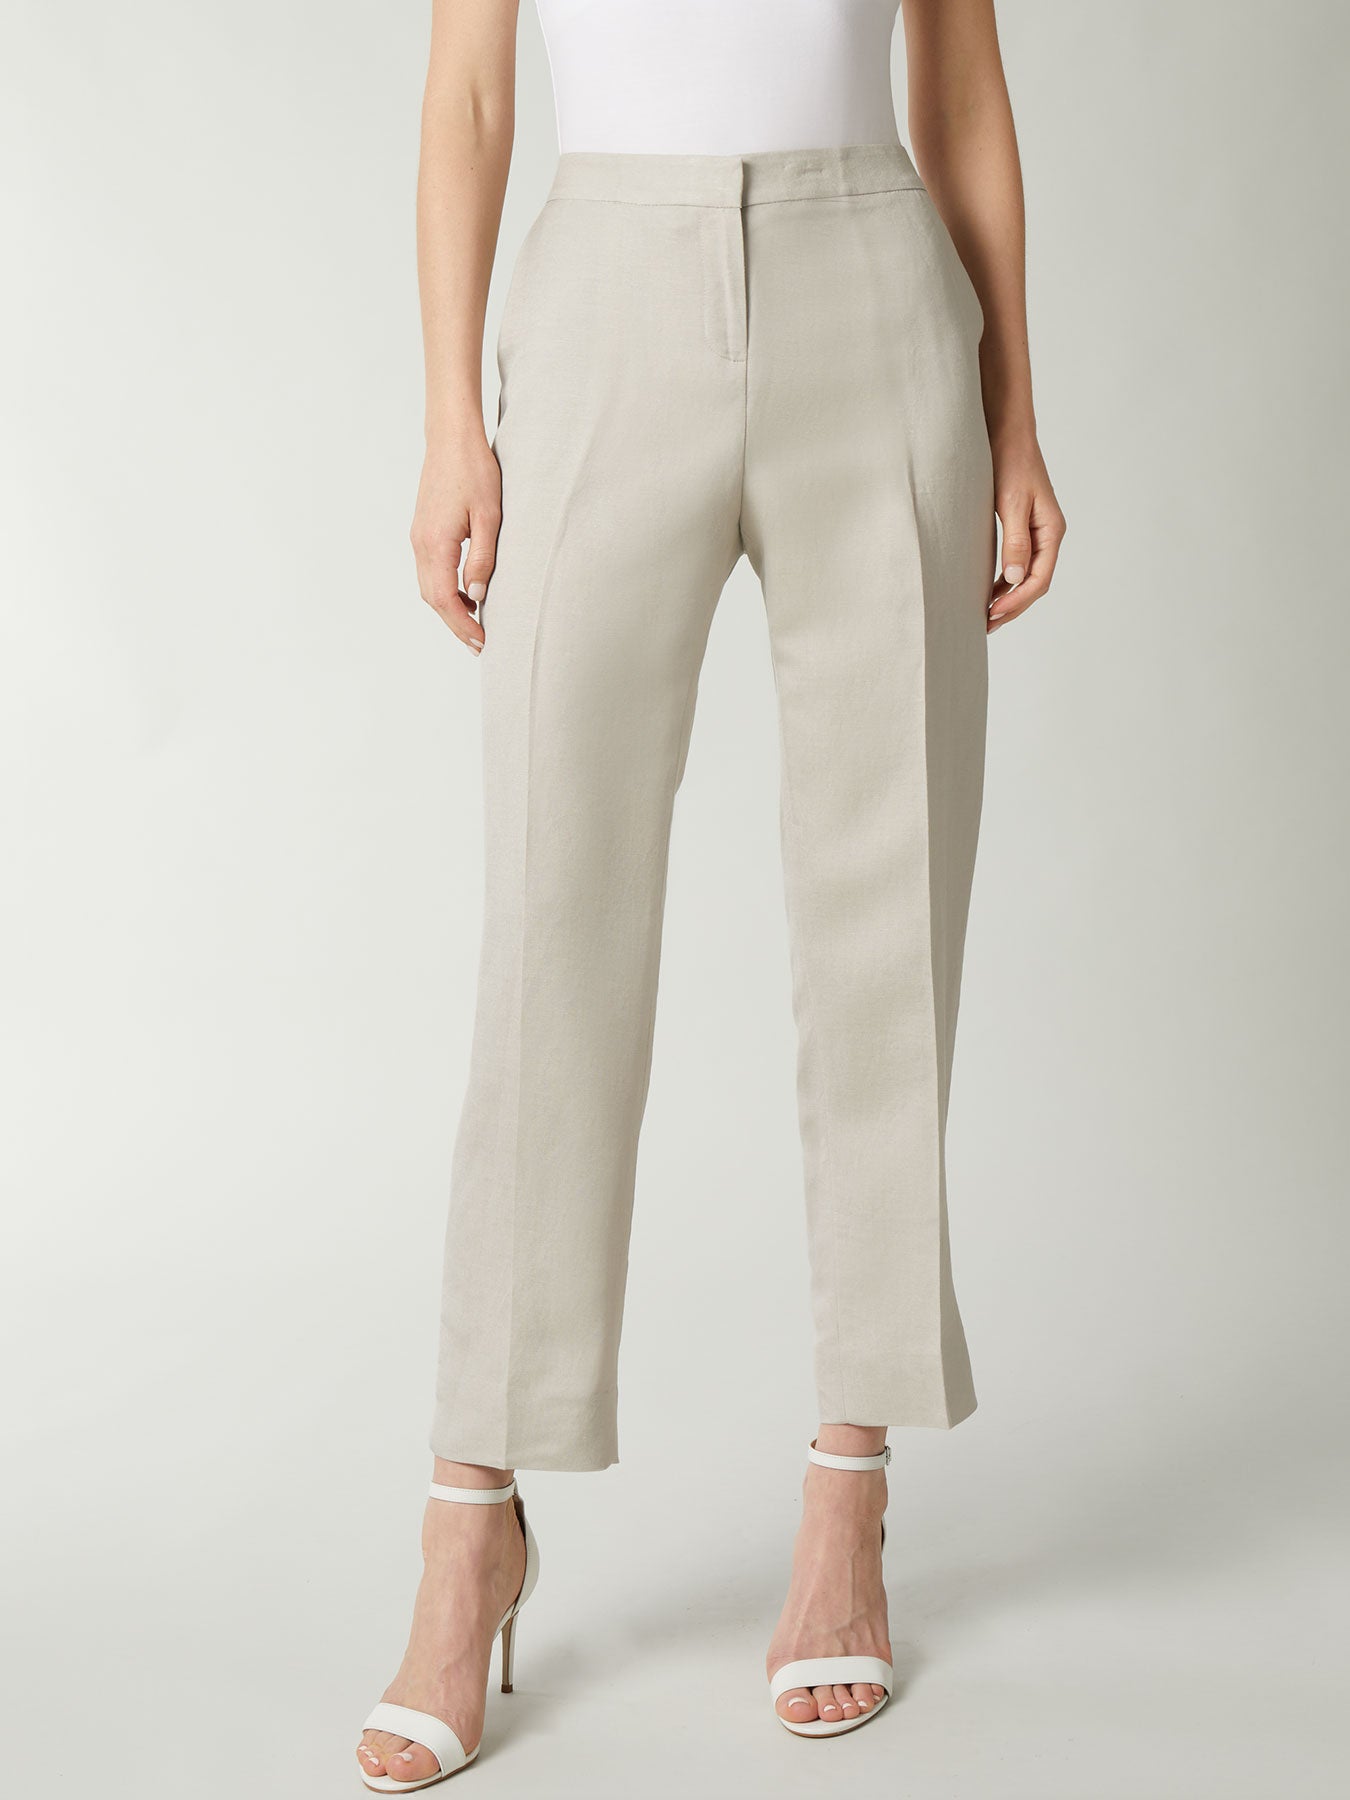 Kasper Size 6/8 Pant Suit Kate Classic Fit Olive and Black EUC (S1159-EF)  *notes